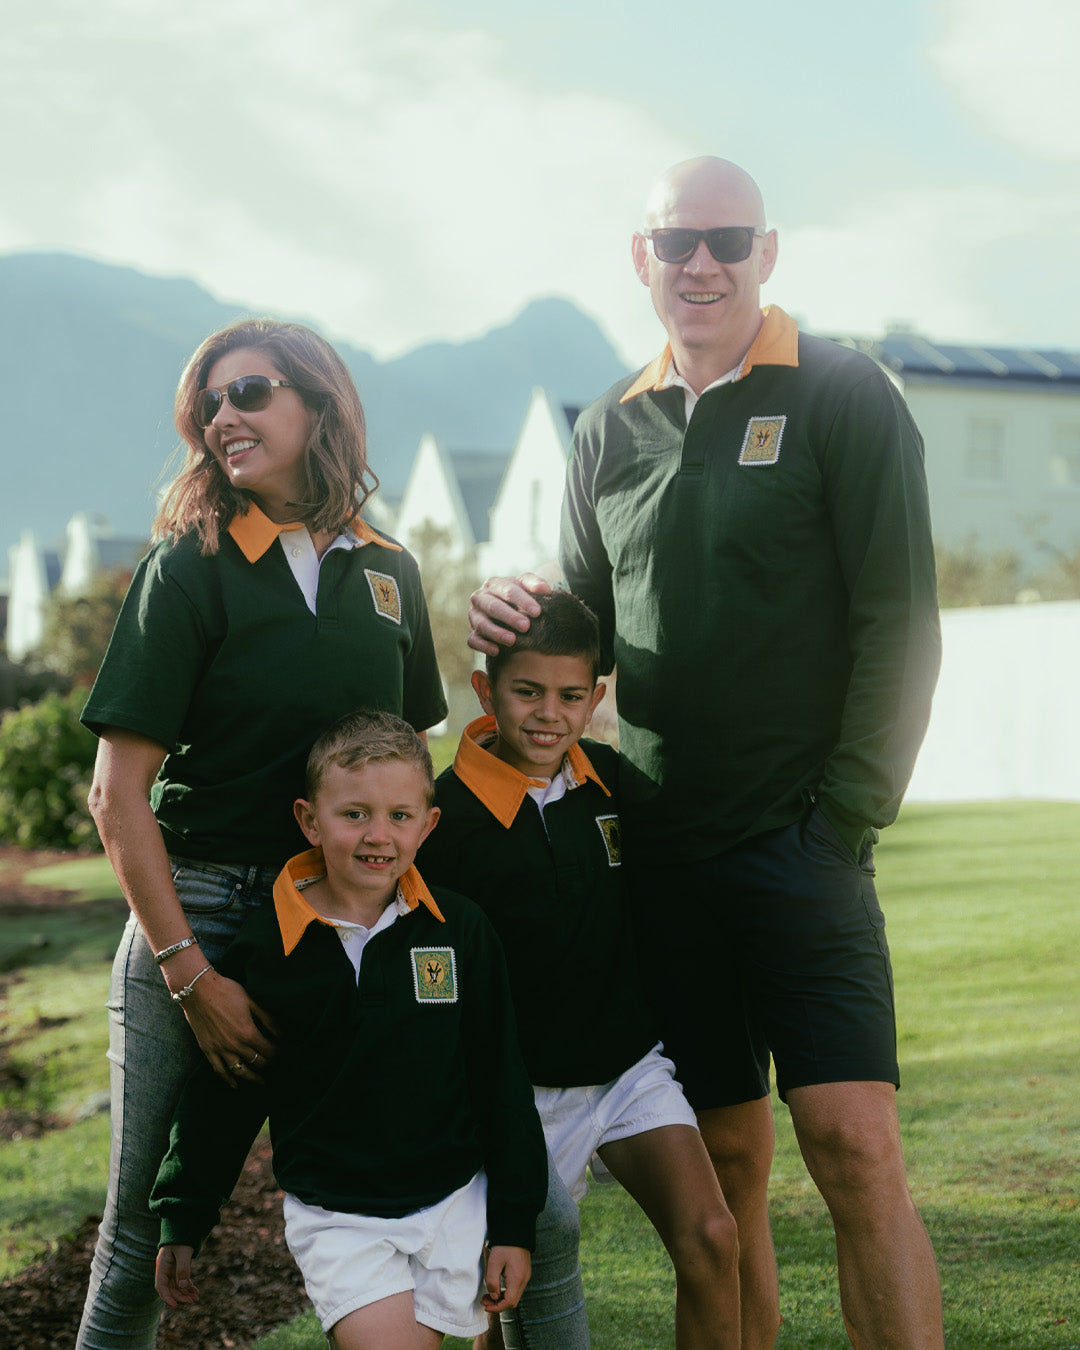 Old School Rugby Jerseys – Old School SA